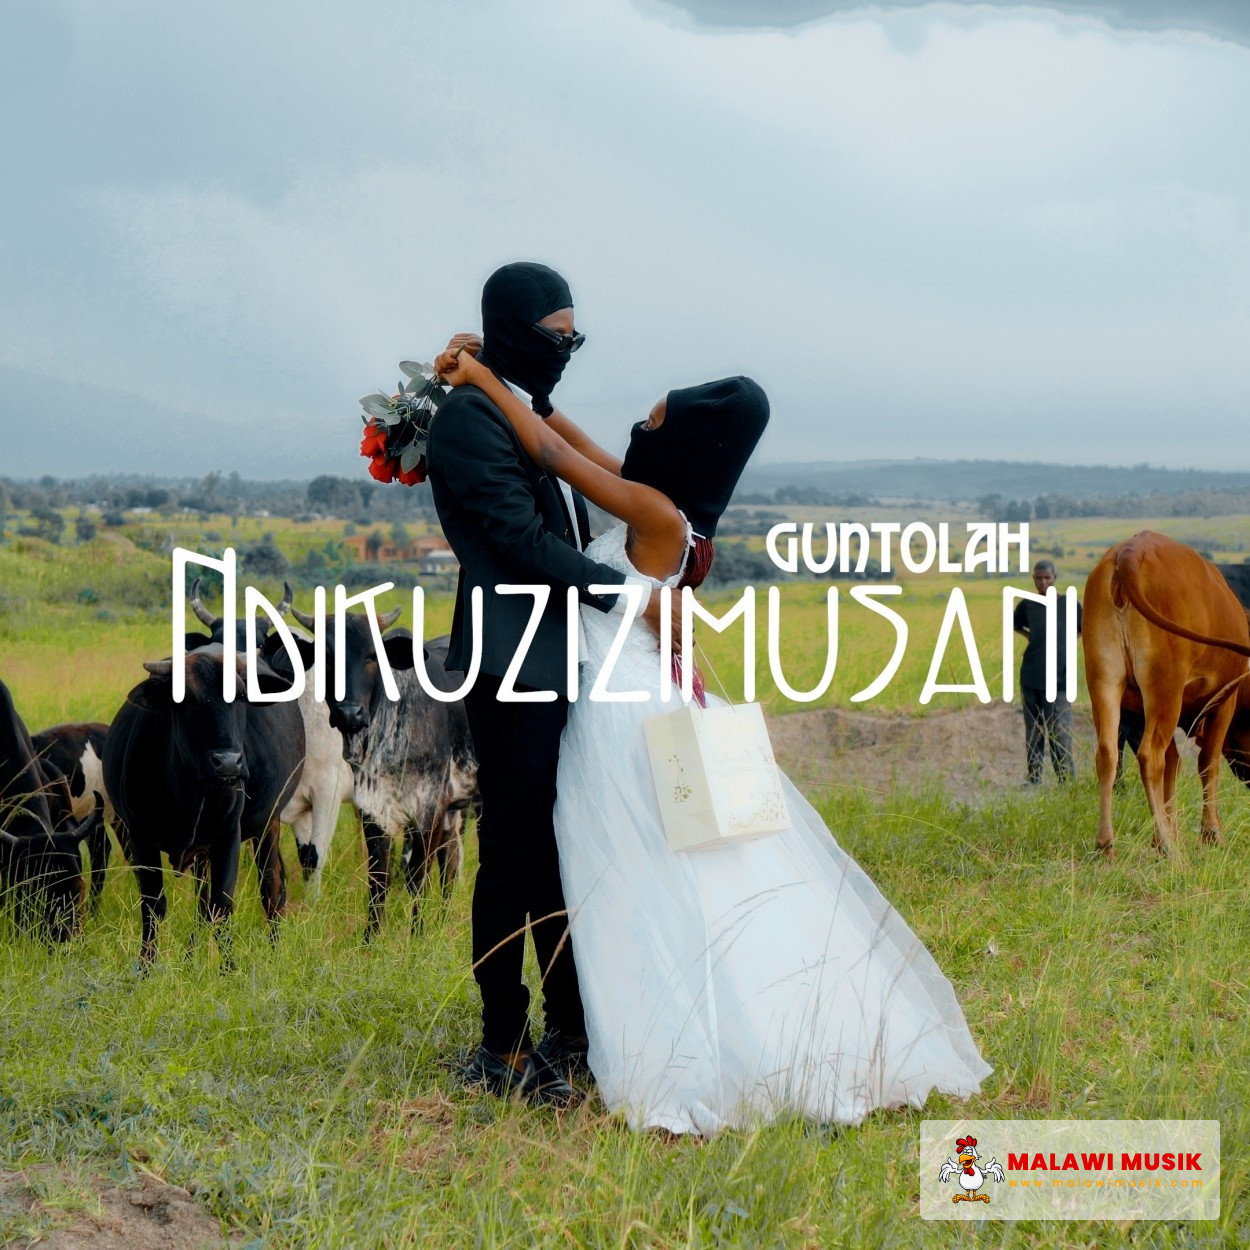 Guntolah-Guntolah - Ndikuzizimusani (Prod. Oops)-song artwork cover